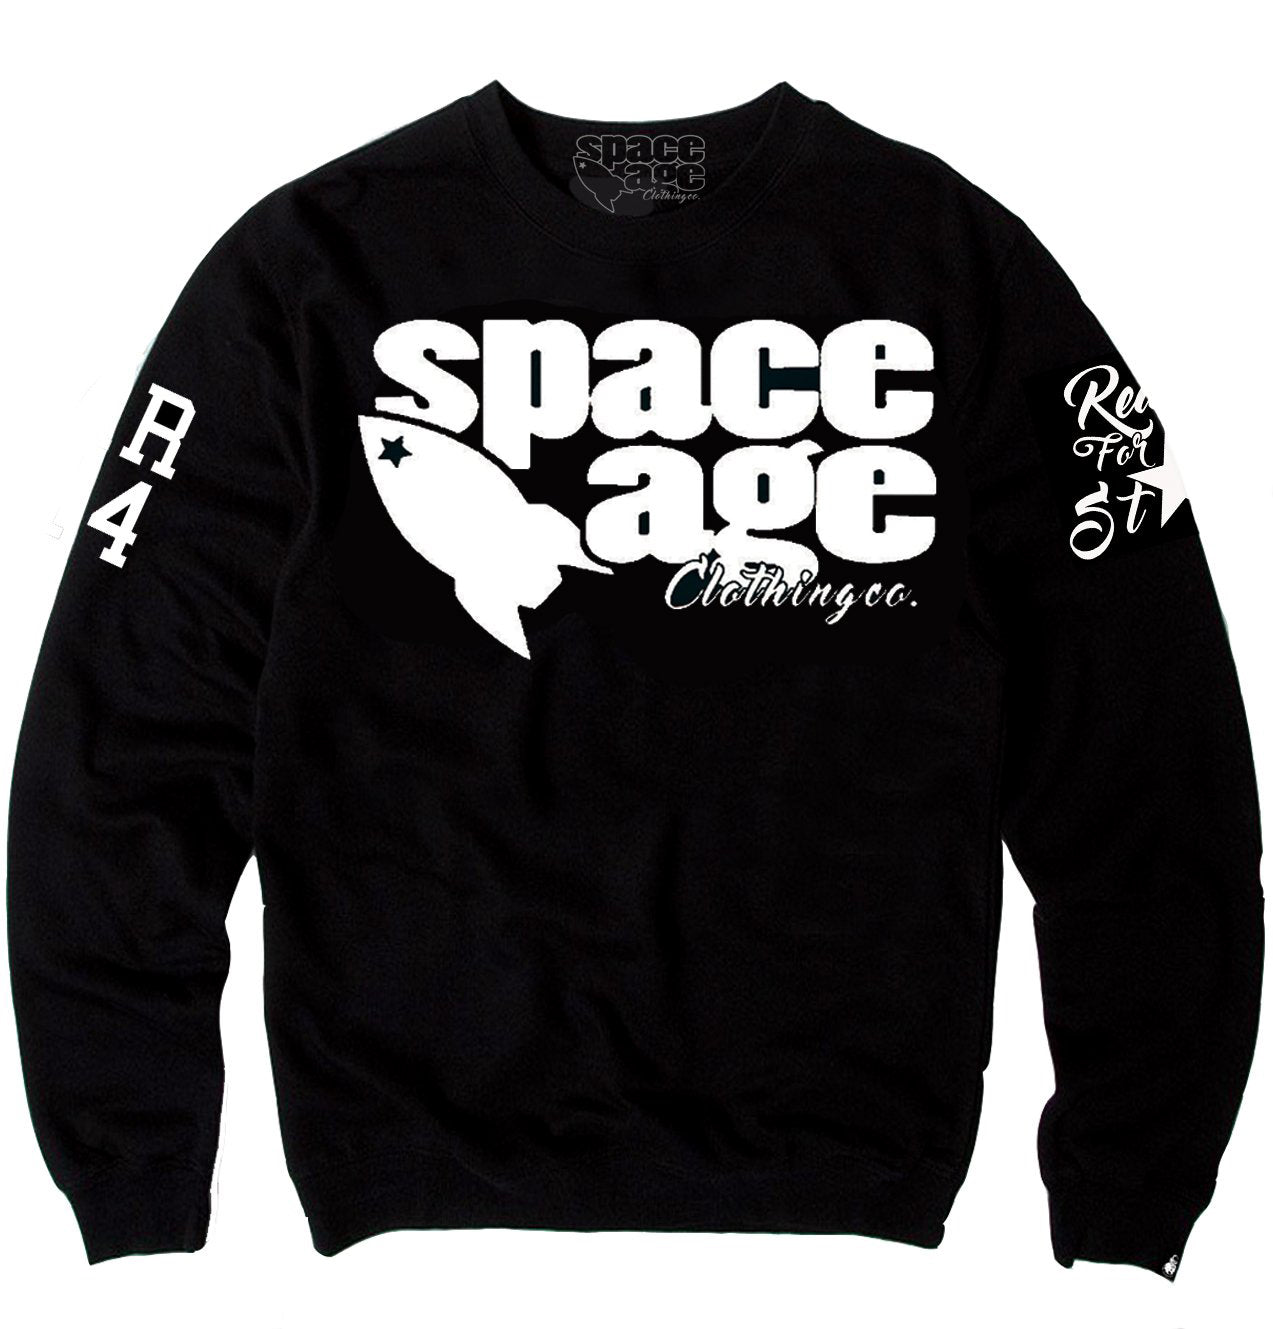 OG SpaceAge Sweat Shirt / Black White